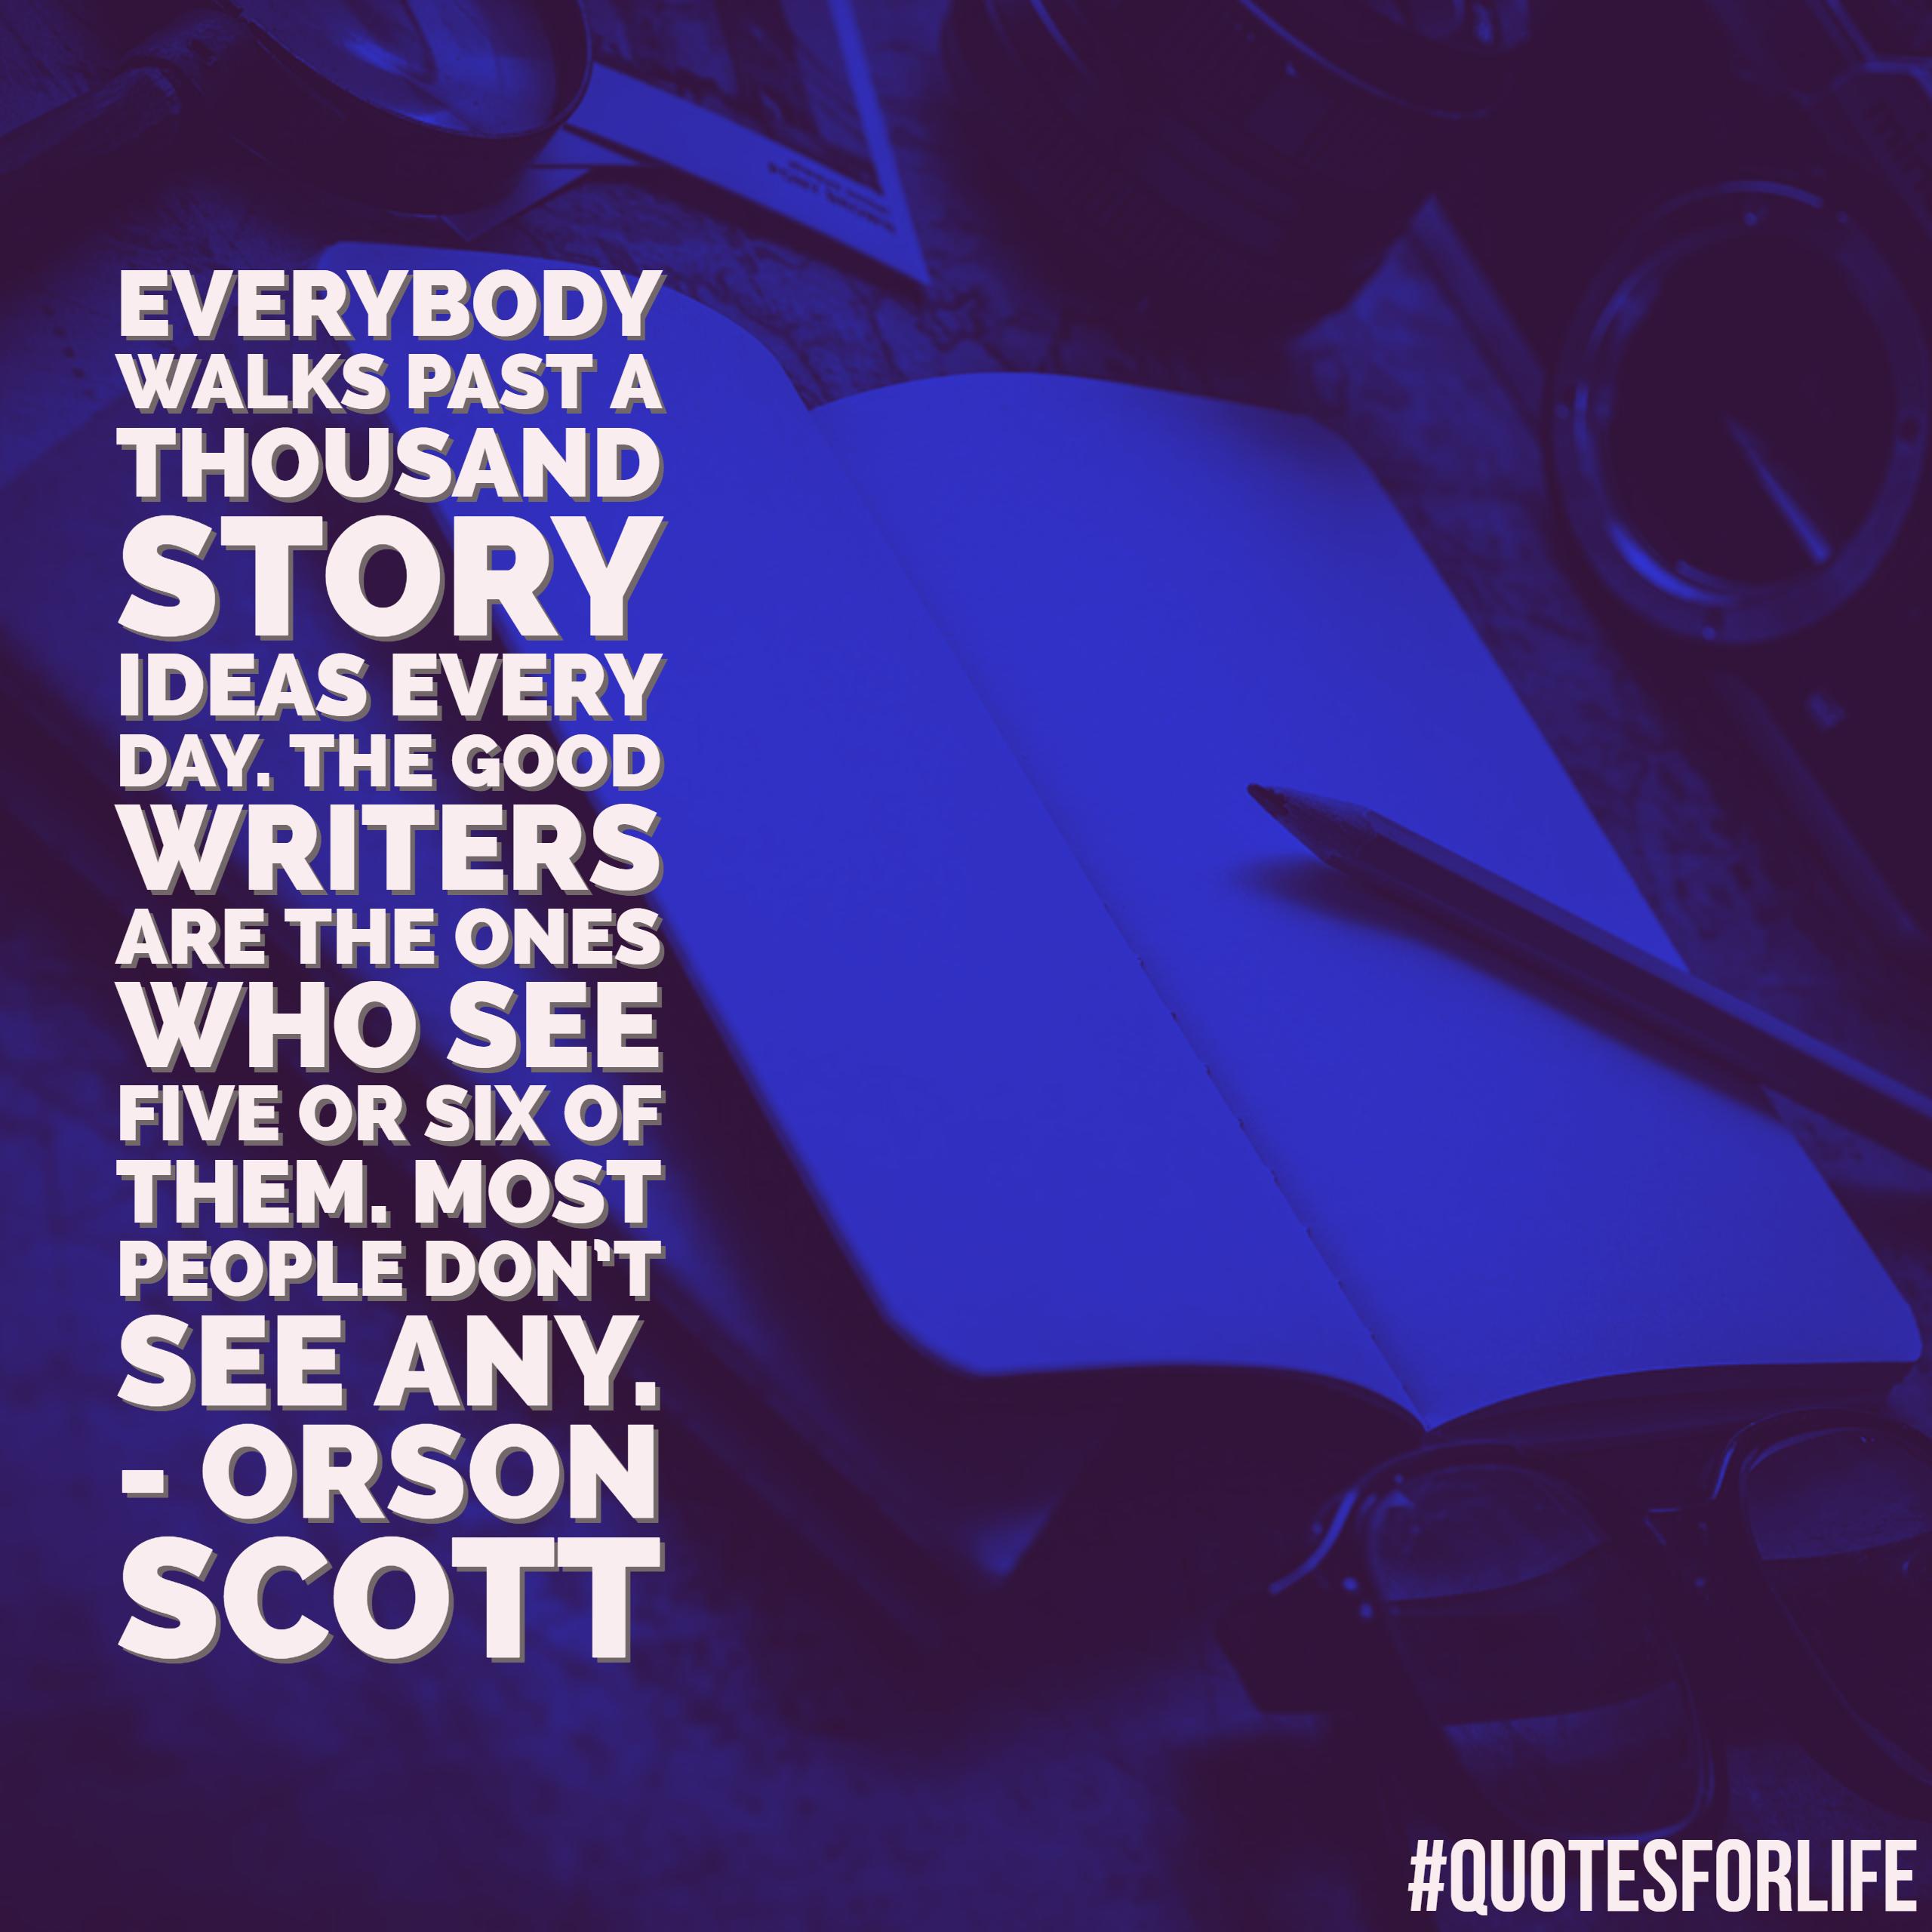 Orson Scott